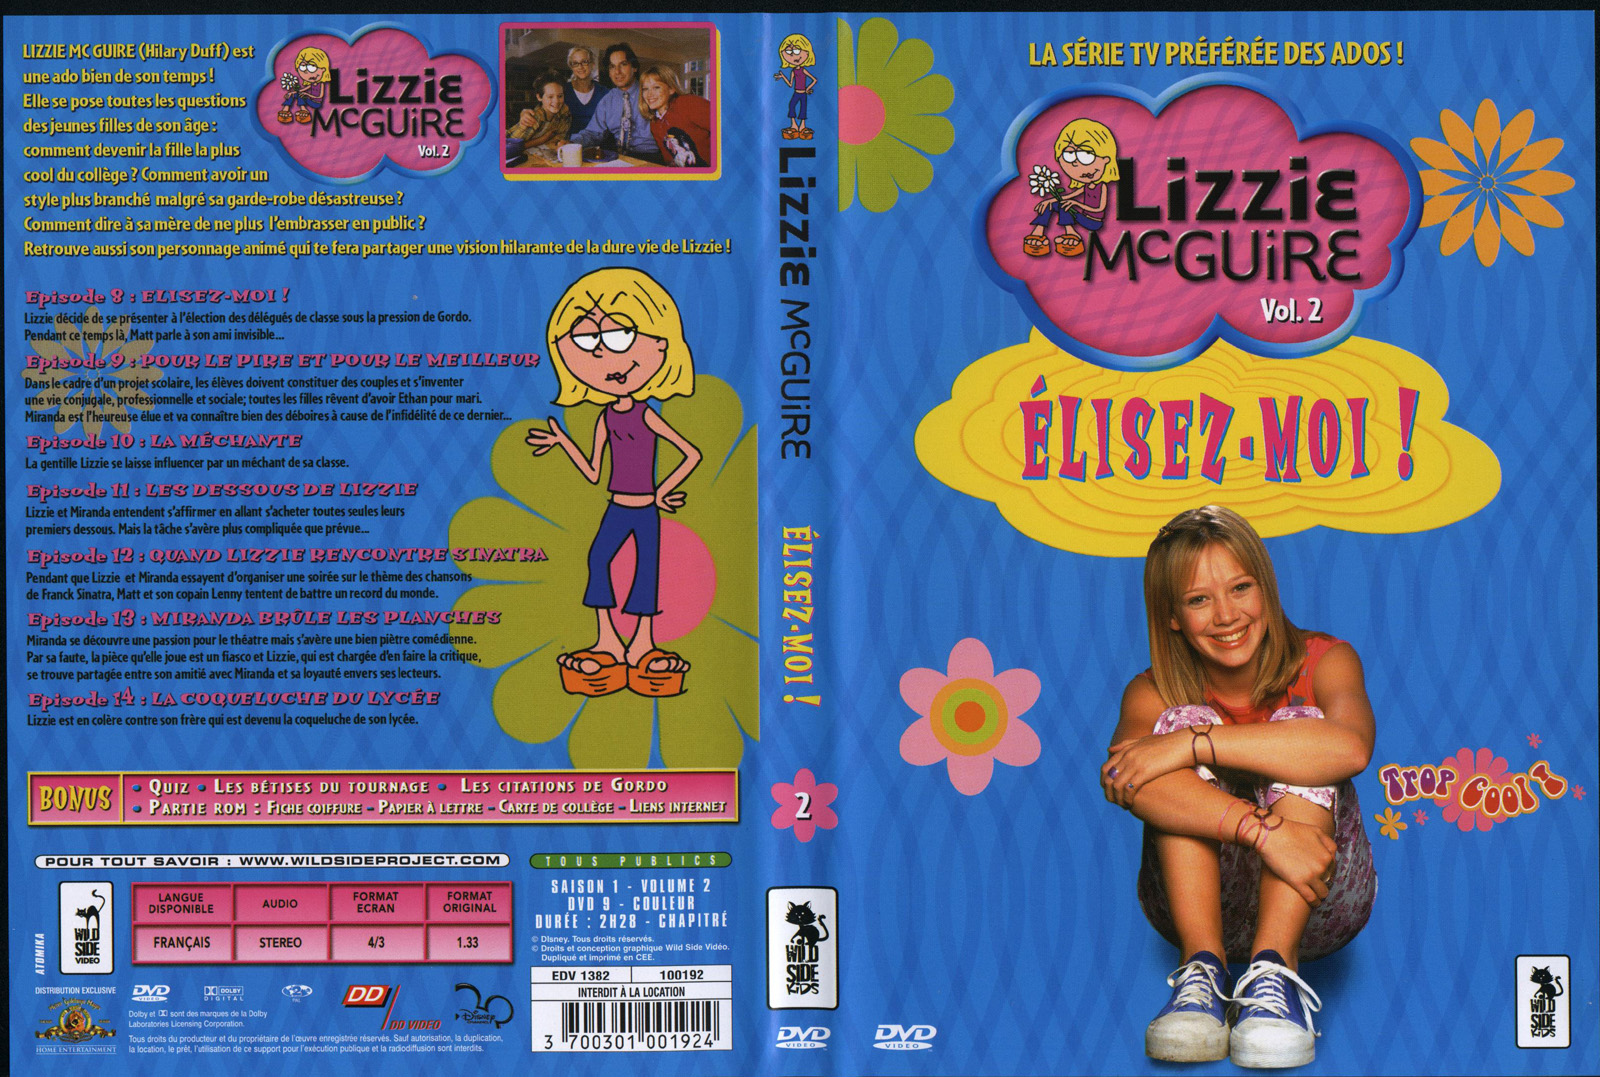 Jaquette DVD Lizzie McGuire vol 2